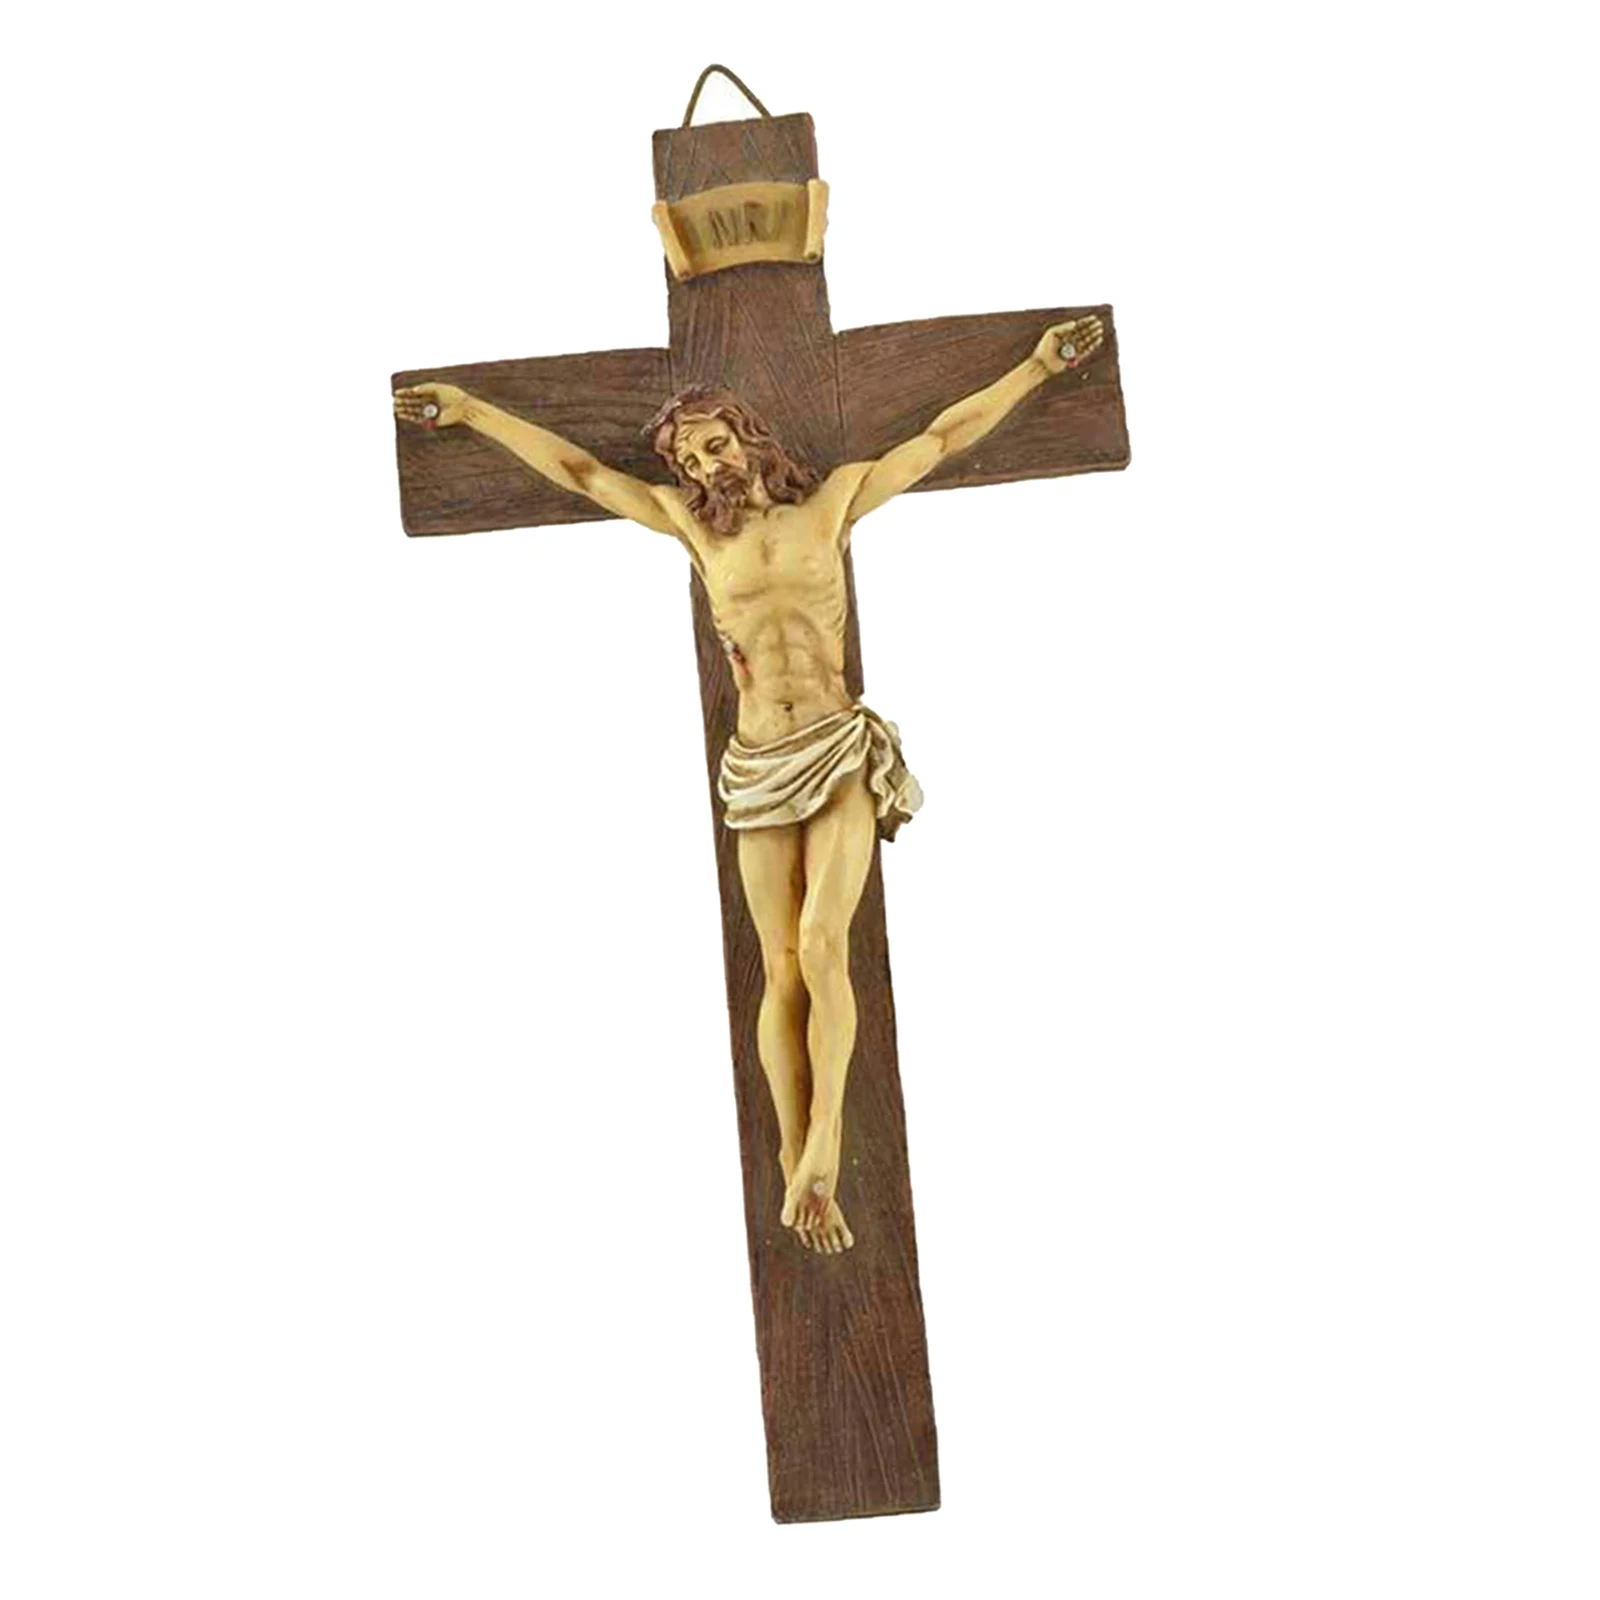 Resin Crucifix Model Jesus Christ Statue Wall Hanging Home Chapel Decorations Catholic Figurine Crafts